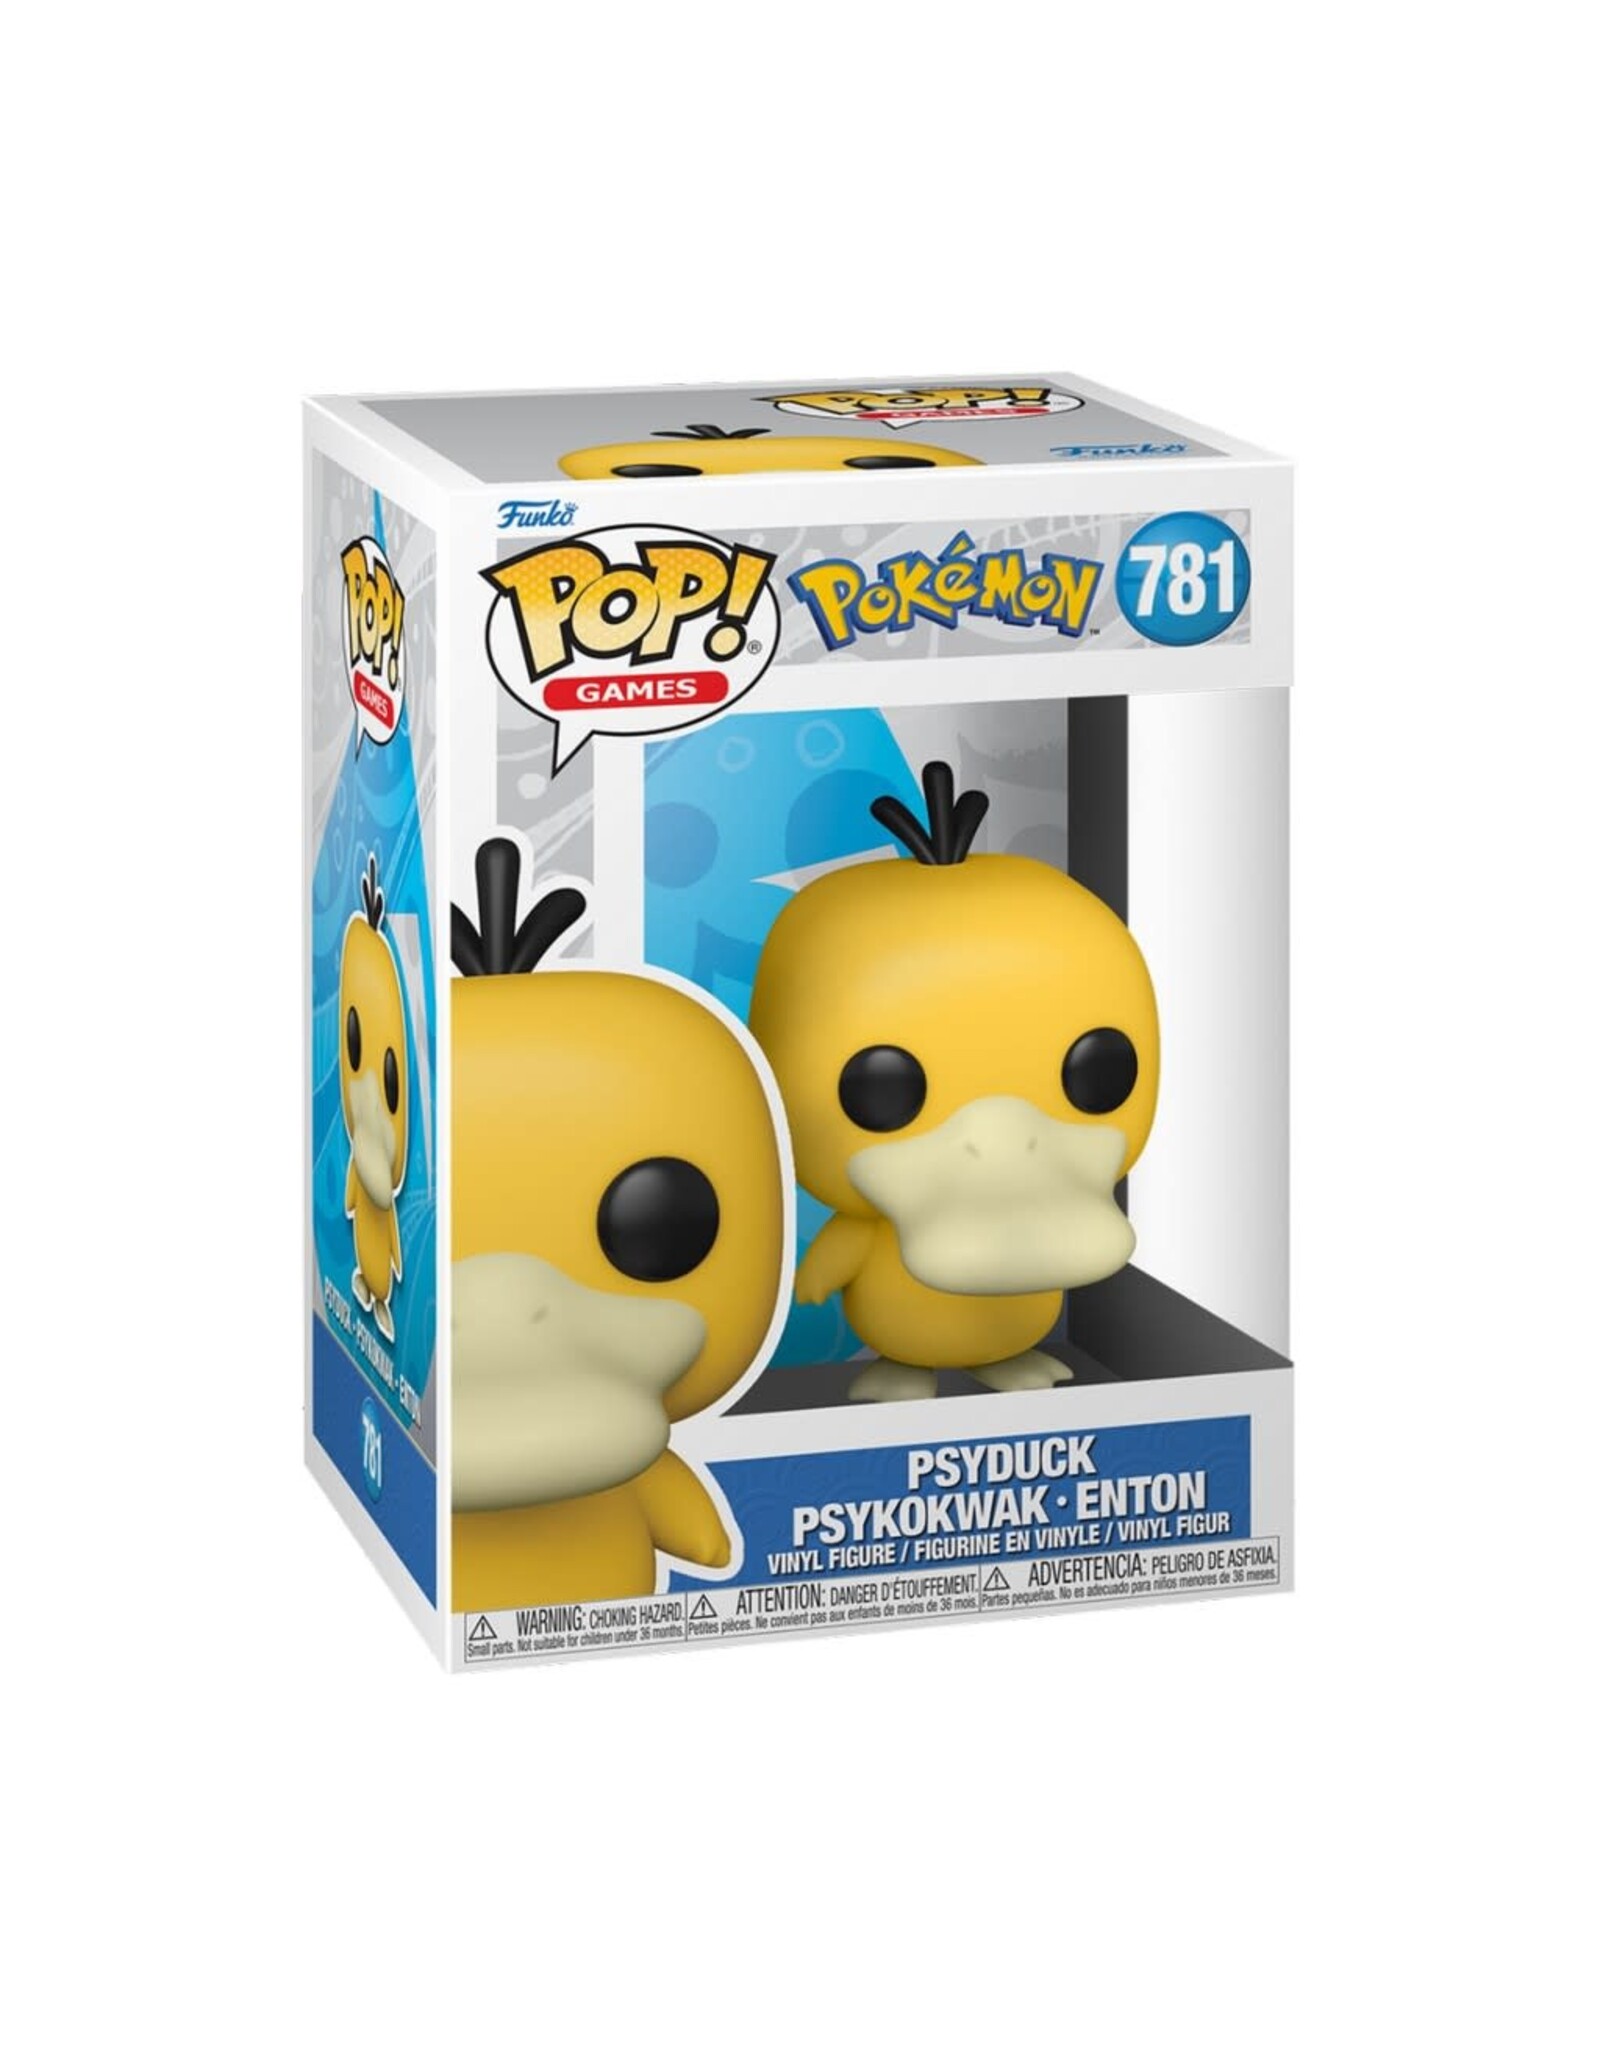 Funko Pop! Funko Pop! Games nr781 Pokémon - Psyduck